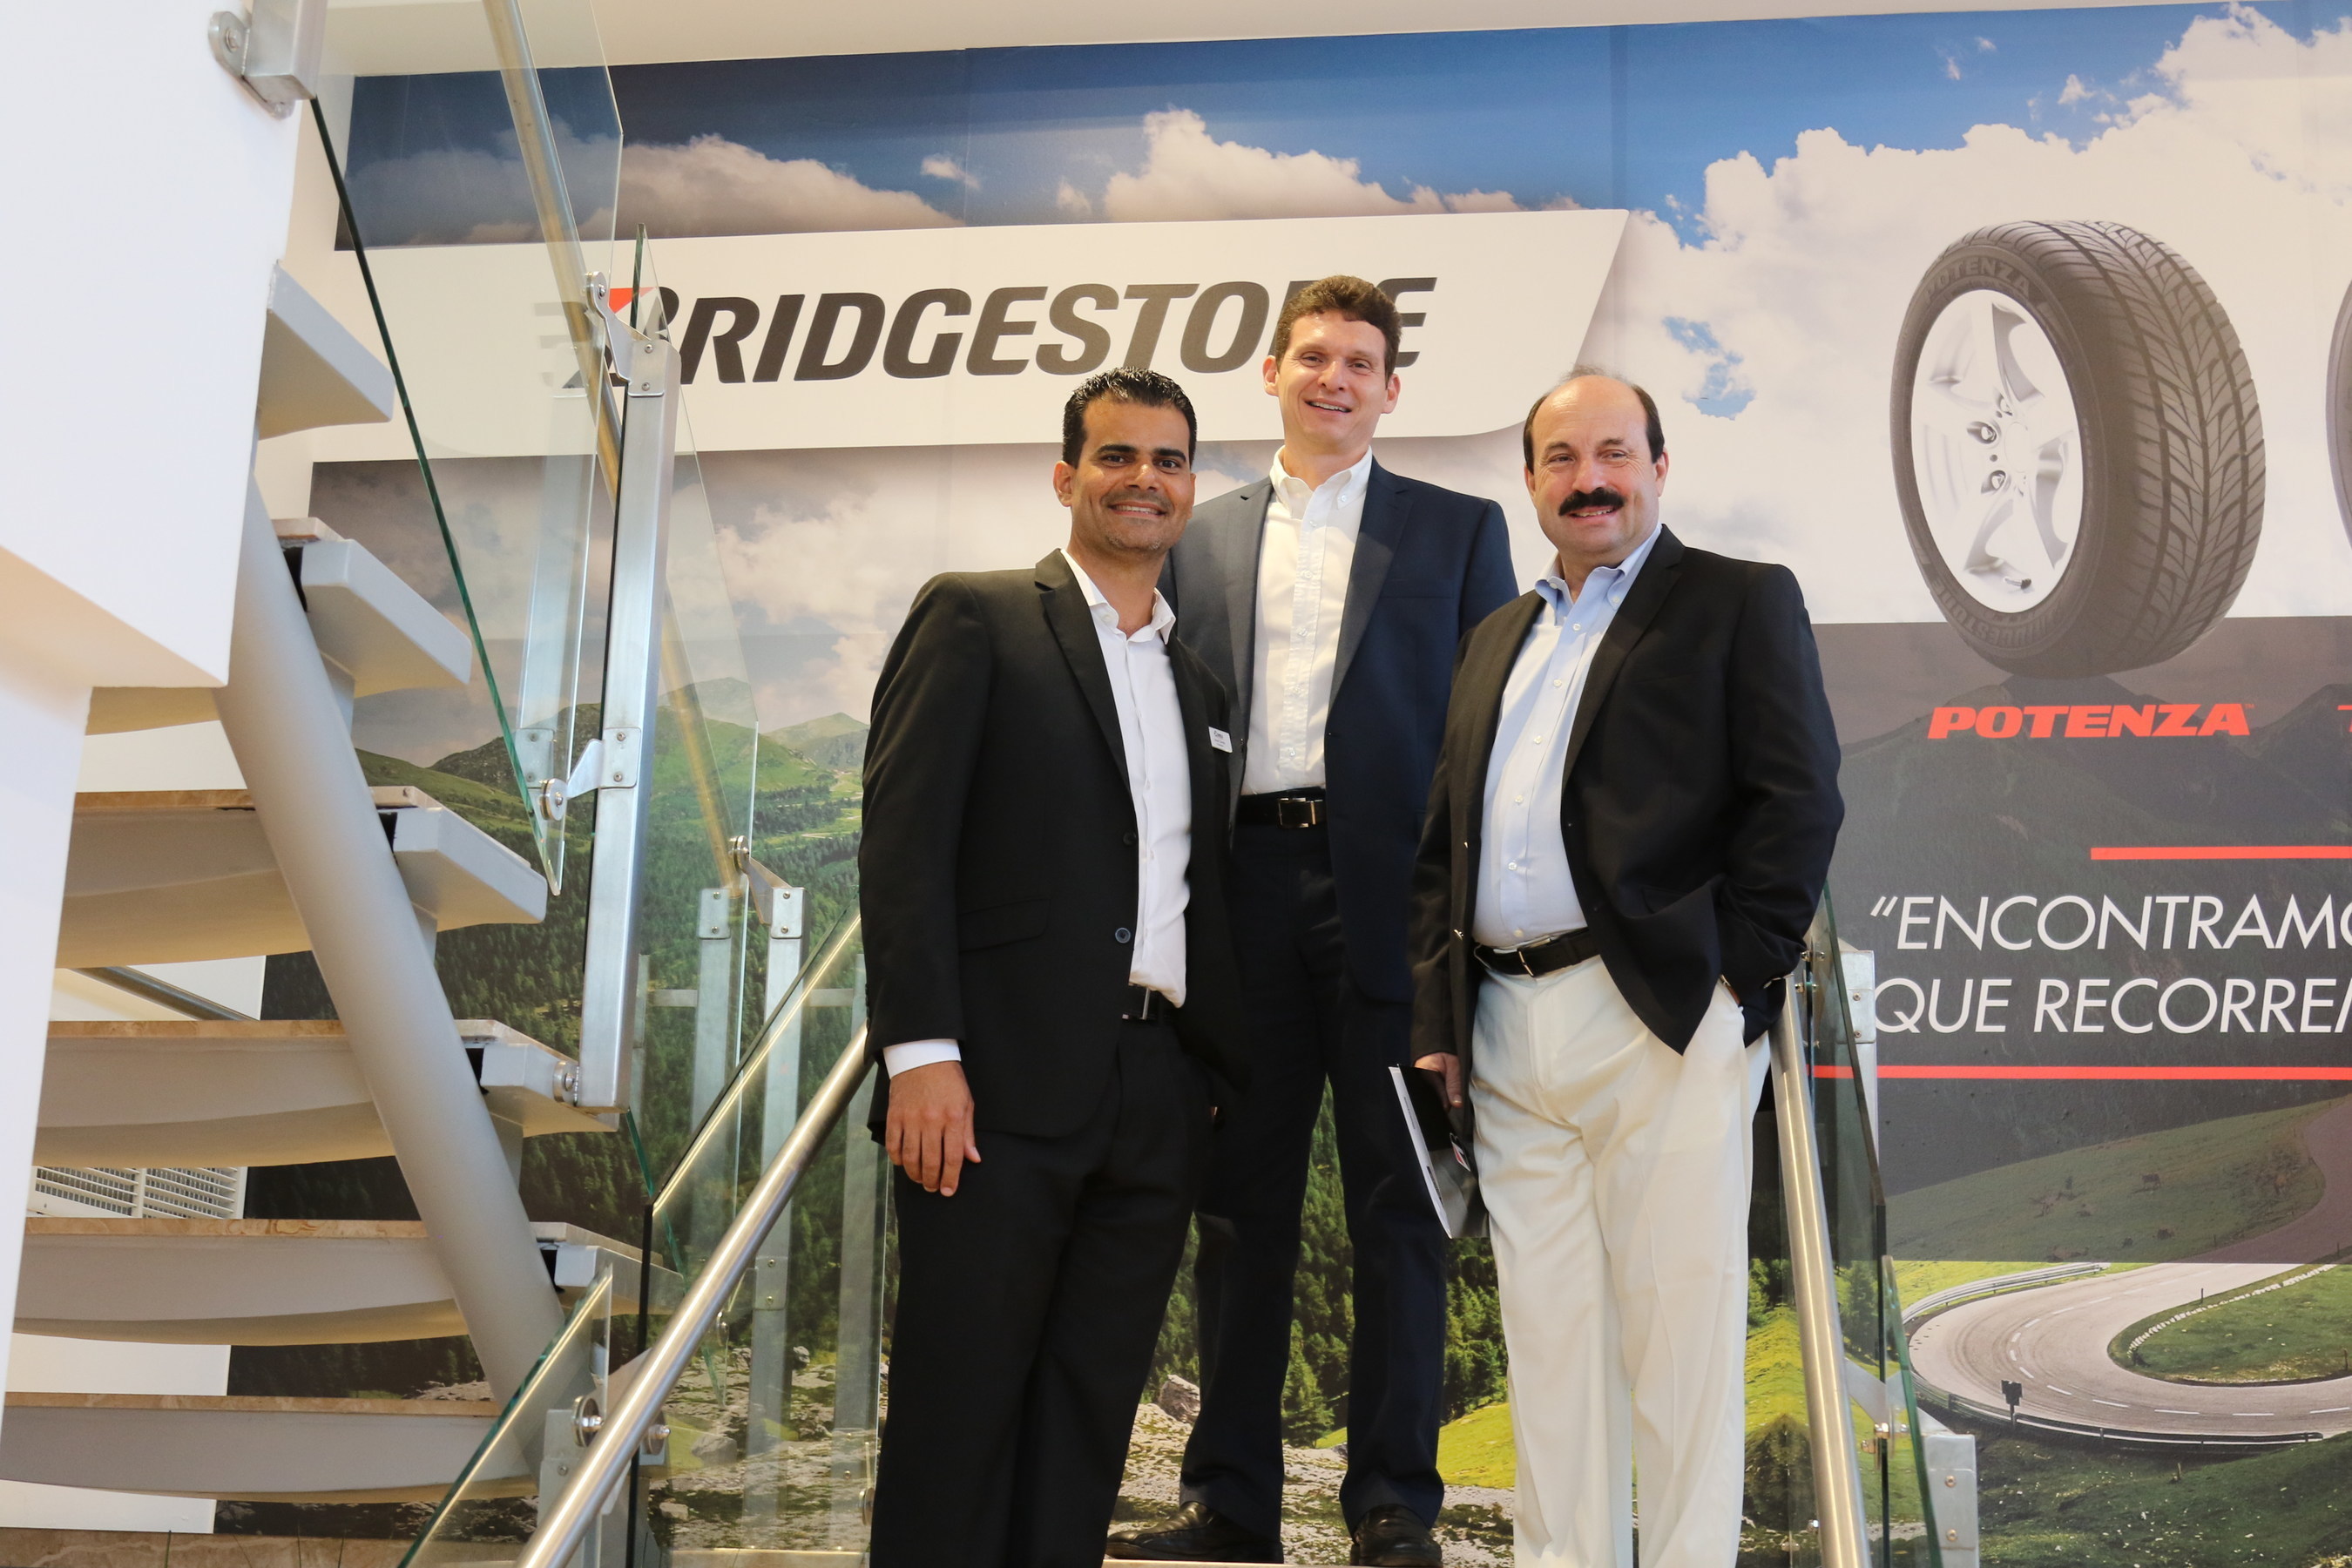 Bridgestone Executives from left to right: Josue Correa, President of Correa Tire Distributors; Erick Herrera, Country Manager of Bridgestone Costa Rica, and Daniel Benvenuti; President of BS-LAN.